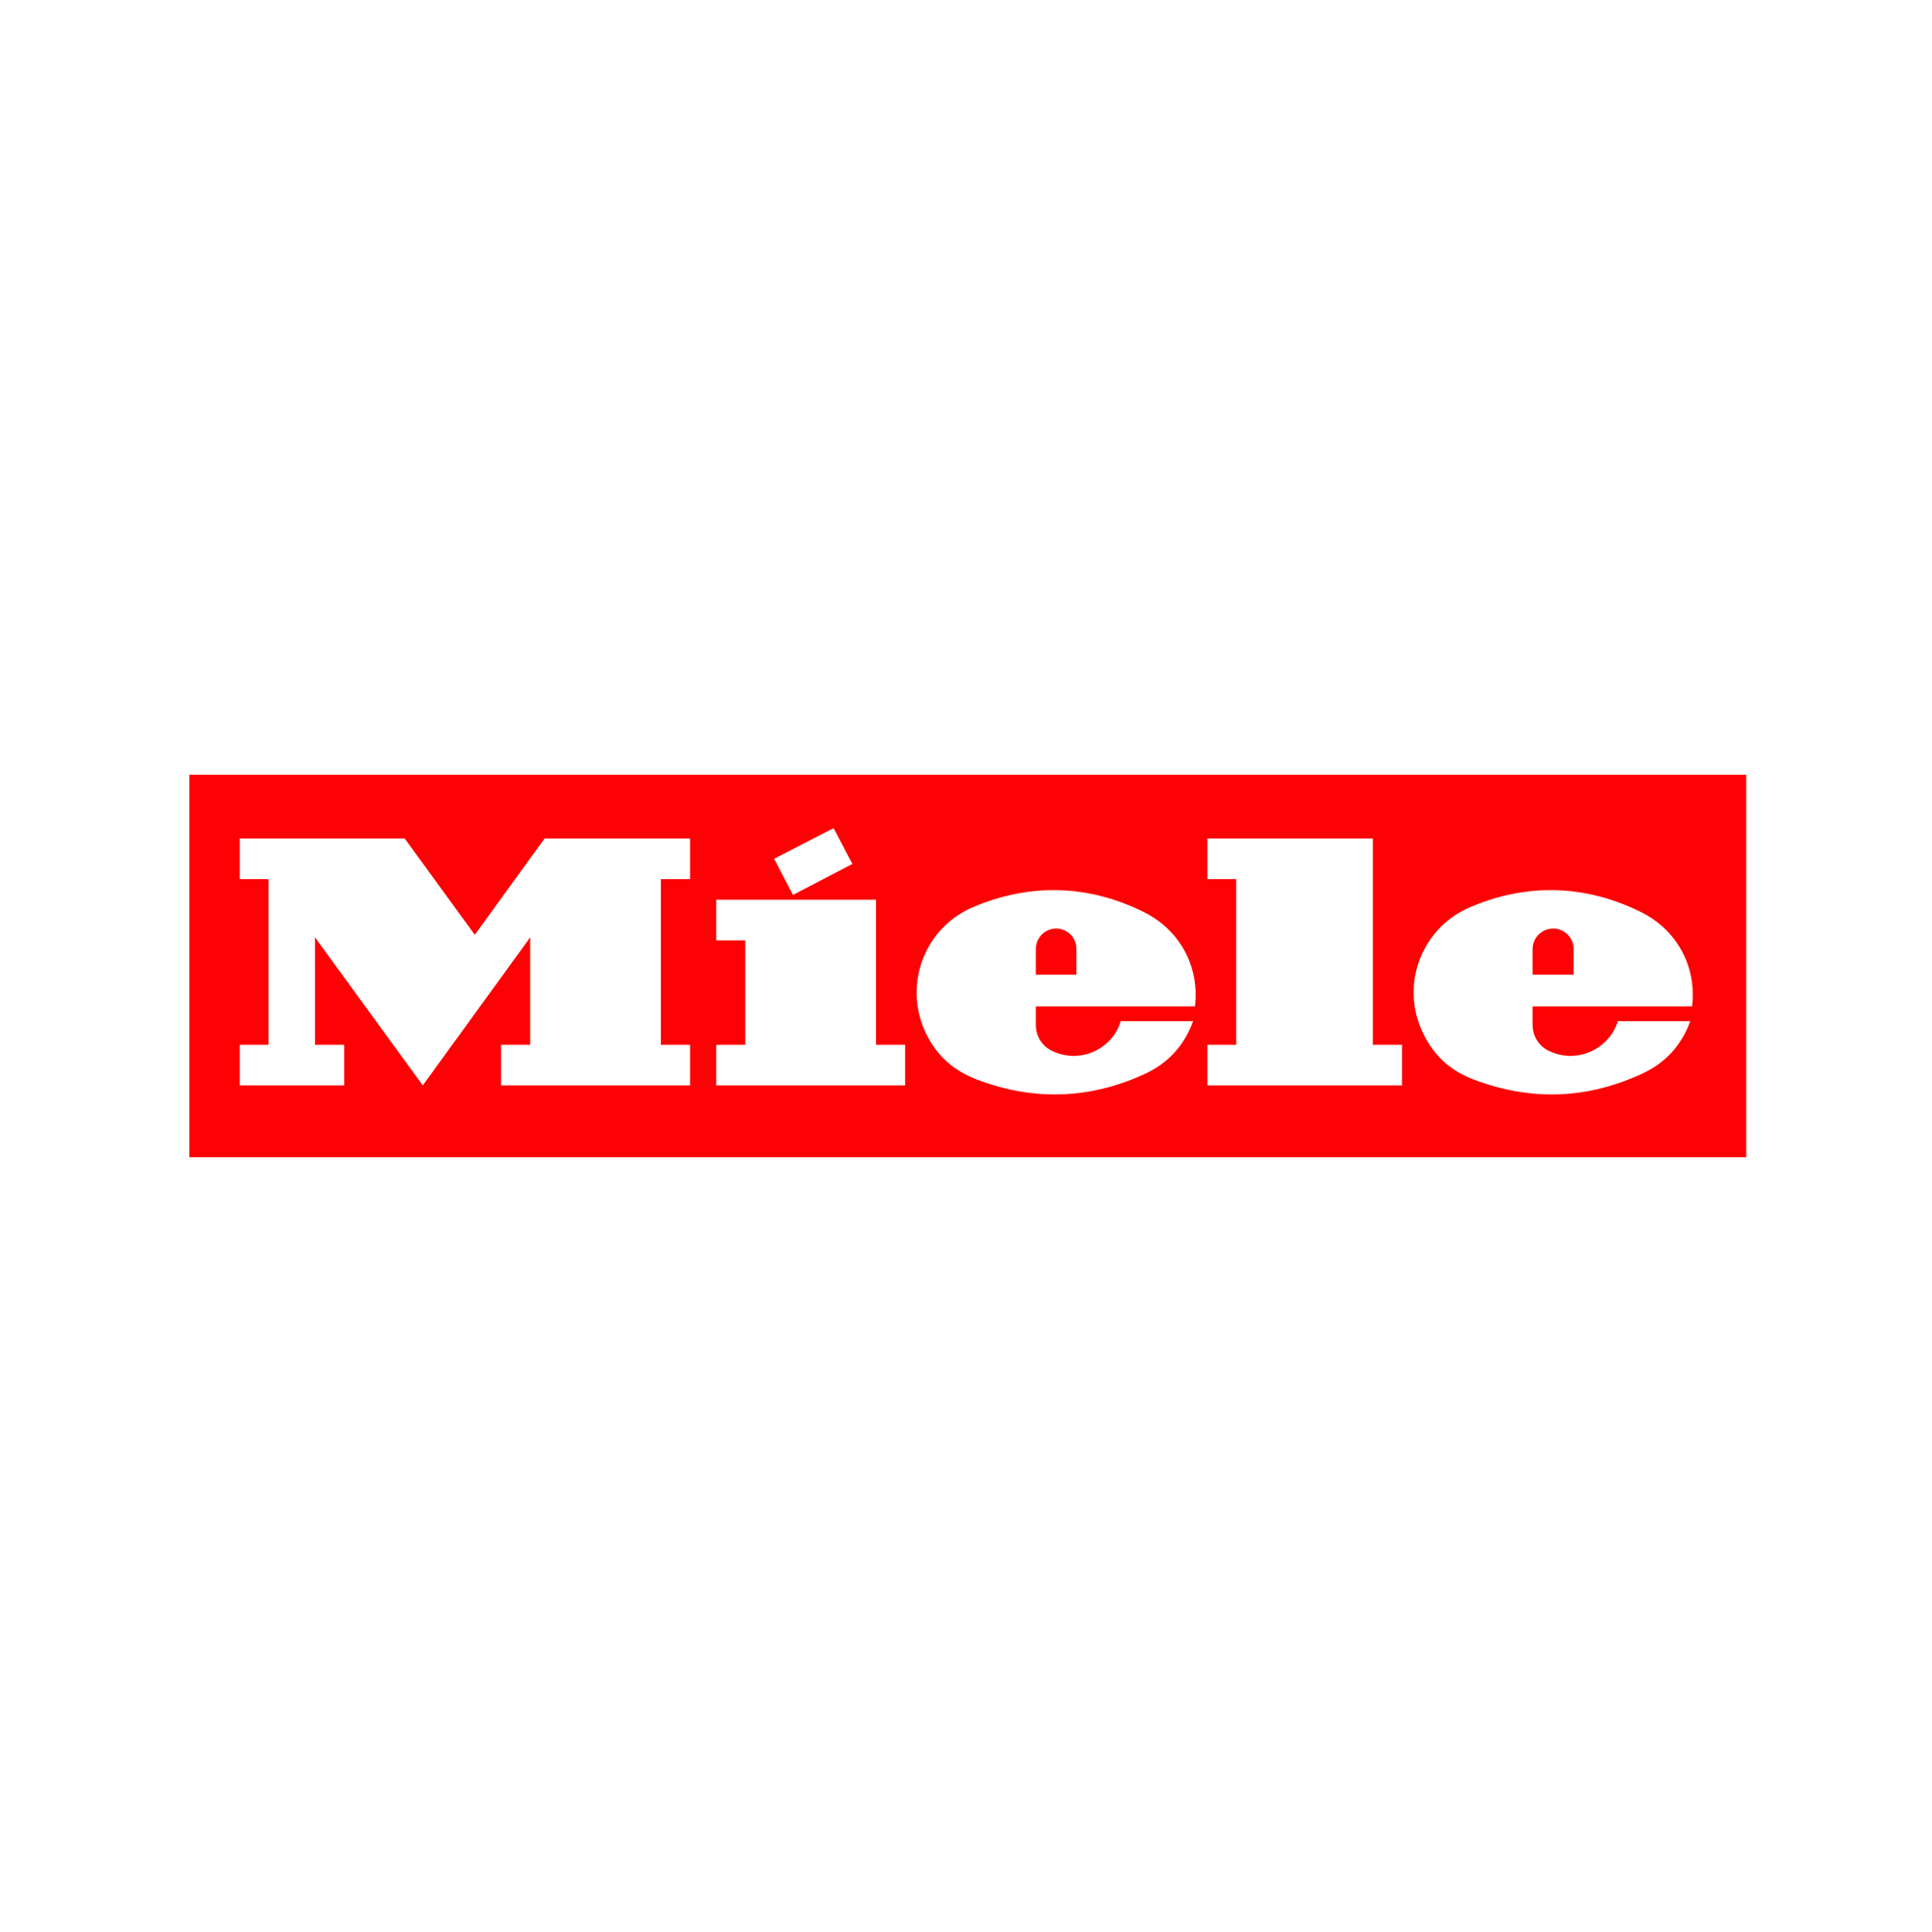 Miele-Logo